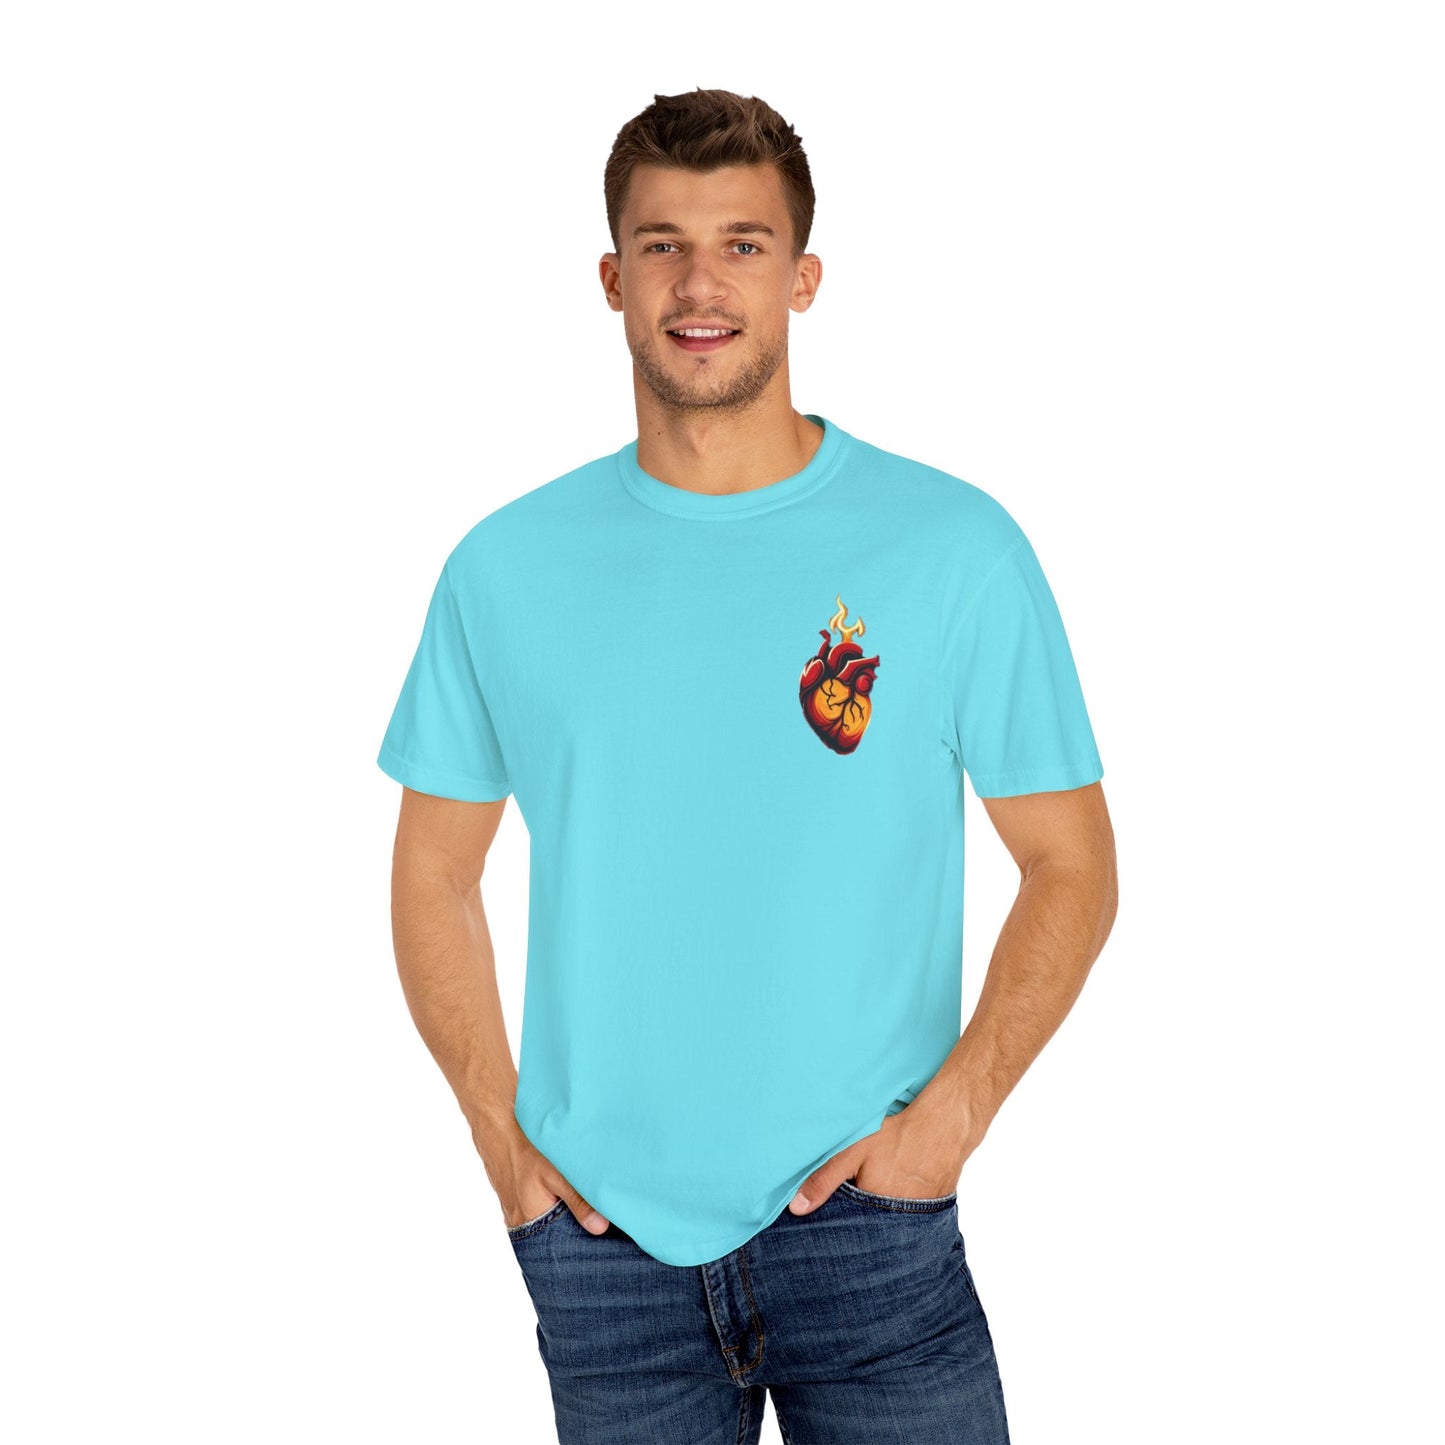 Unisex Garment-Dyed T-shirt - The Warriors Will #Inspiration# #Discipline# #Train#